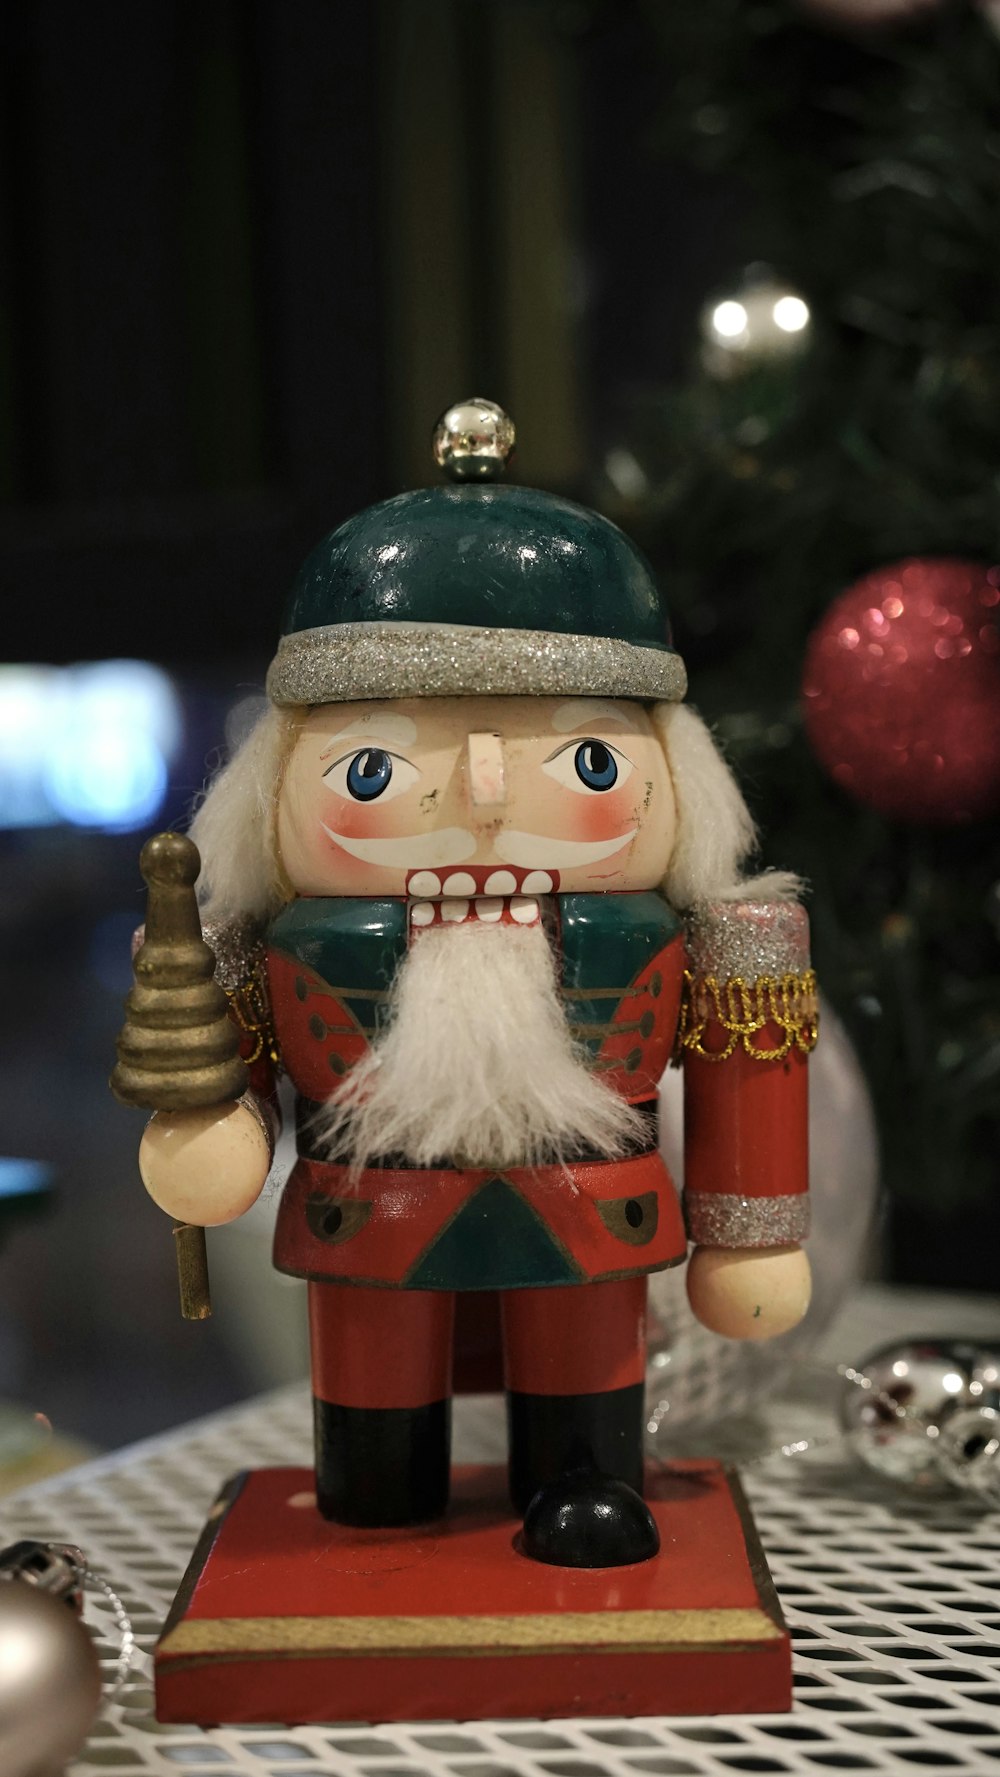 a nutcracker figurine on a table next to a christmas tree